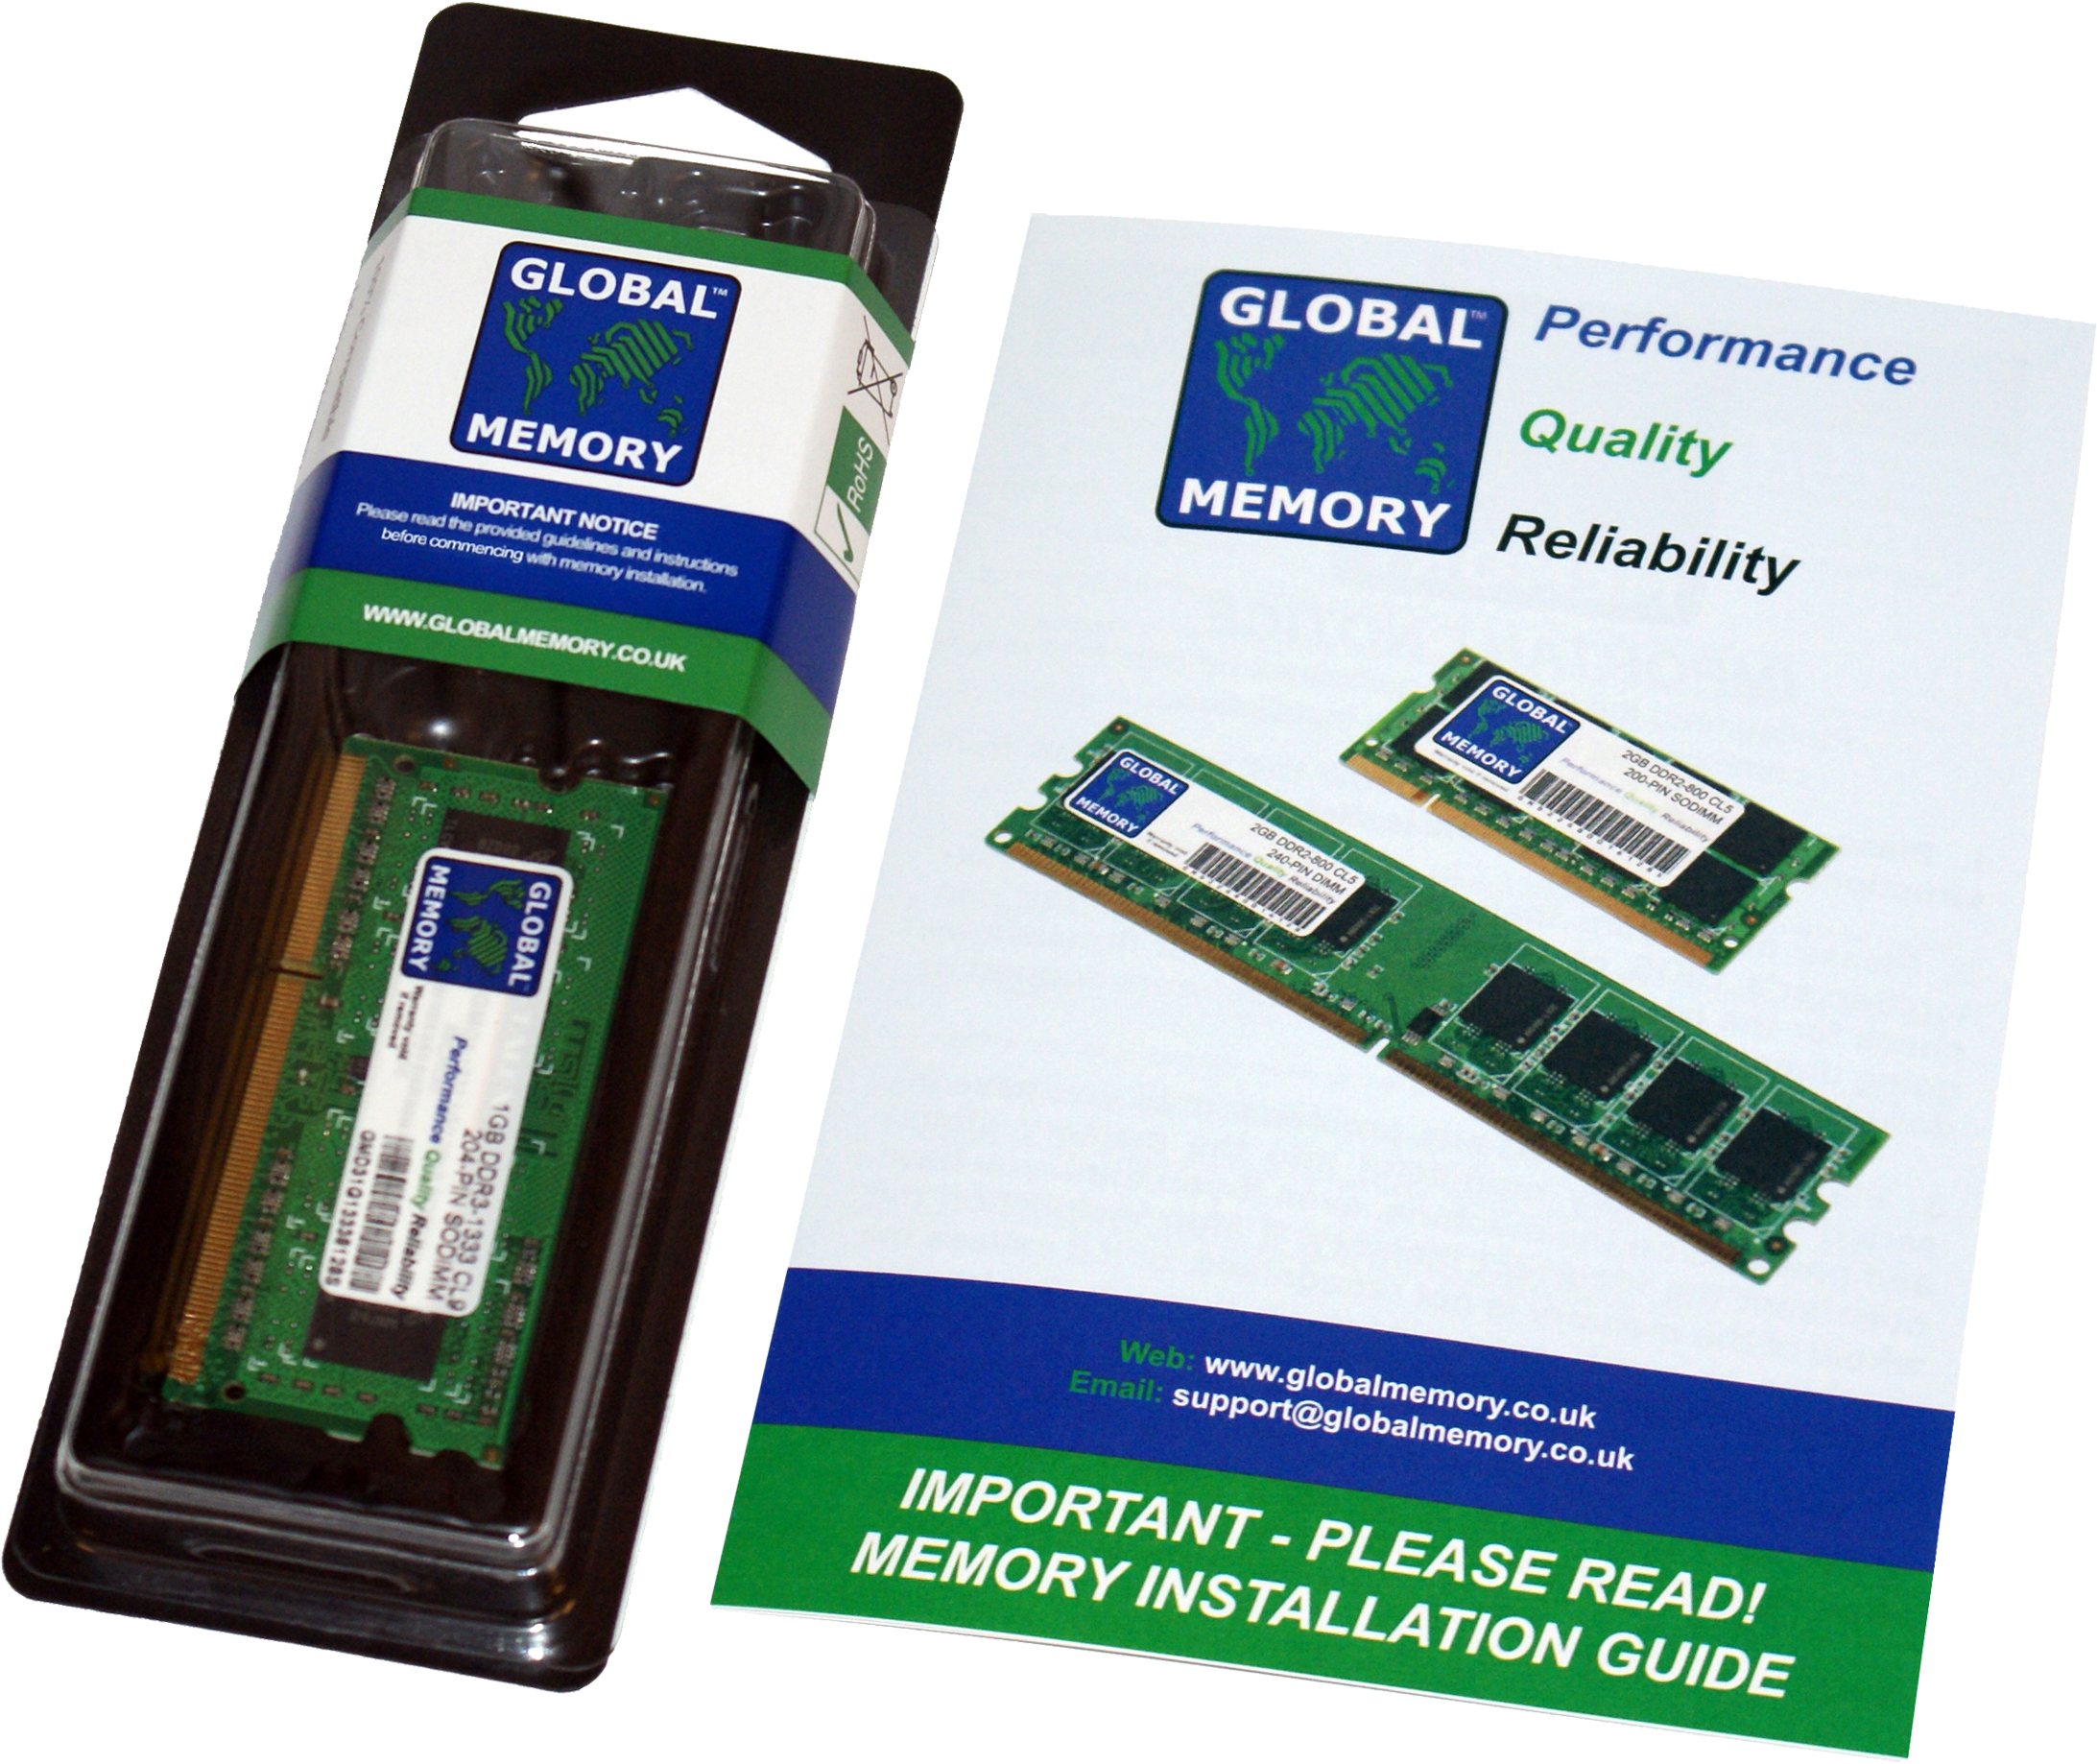 4GB DDR4 2400MHz PC4-19200 260-PIN SODIMM MEMORY RAM FOR SAMSUNG LAPTOPS/NOTEBOOKS